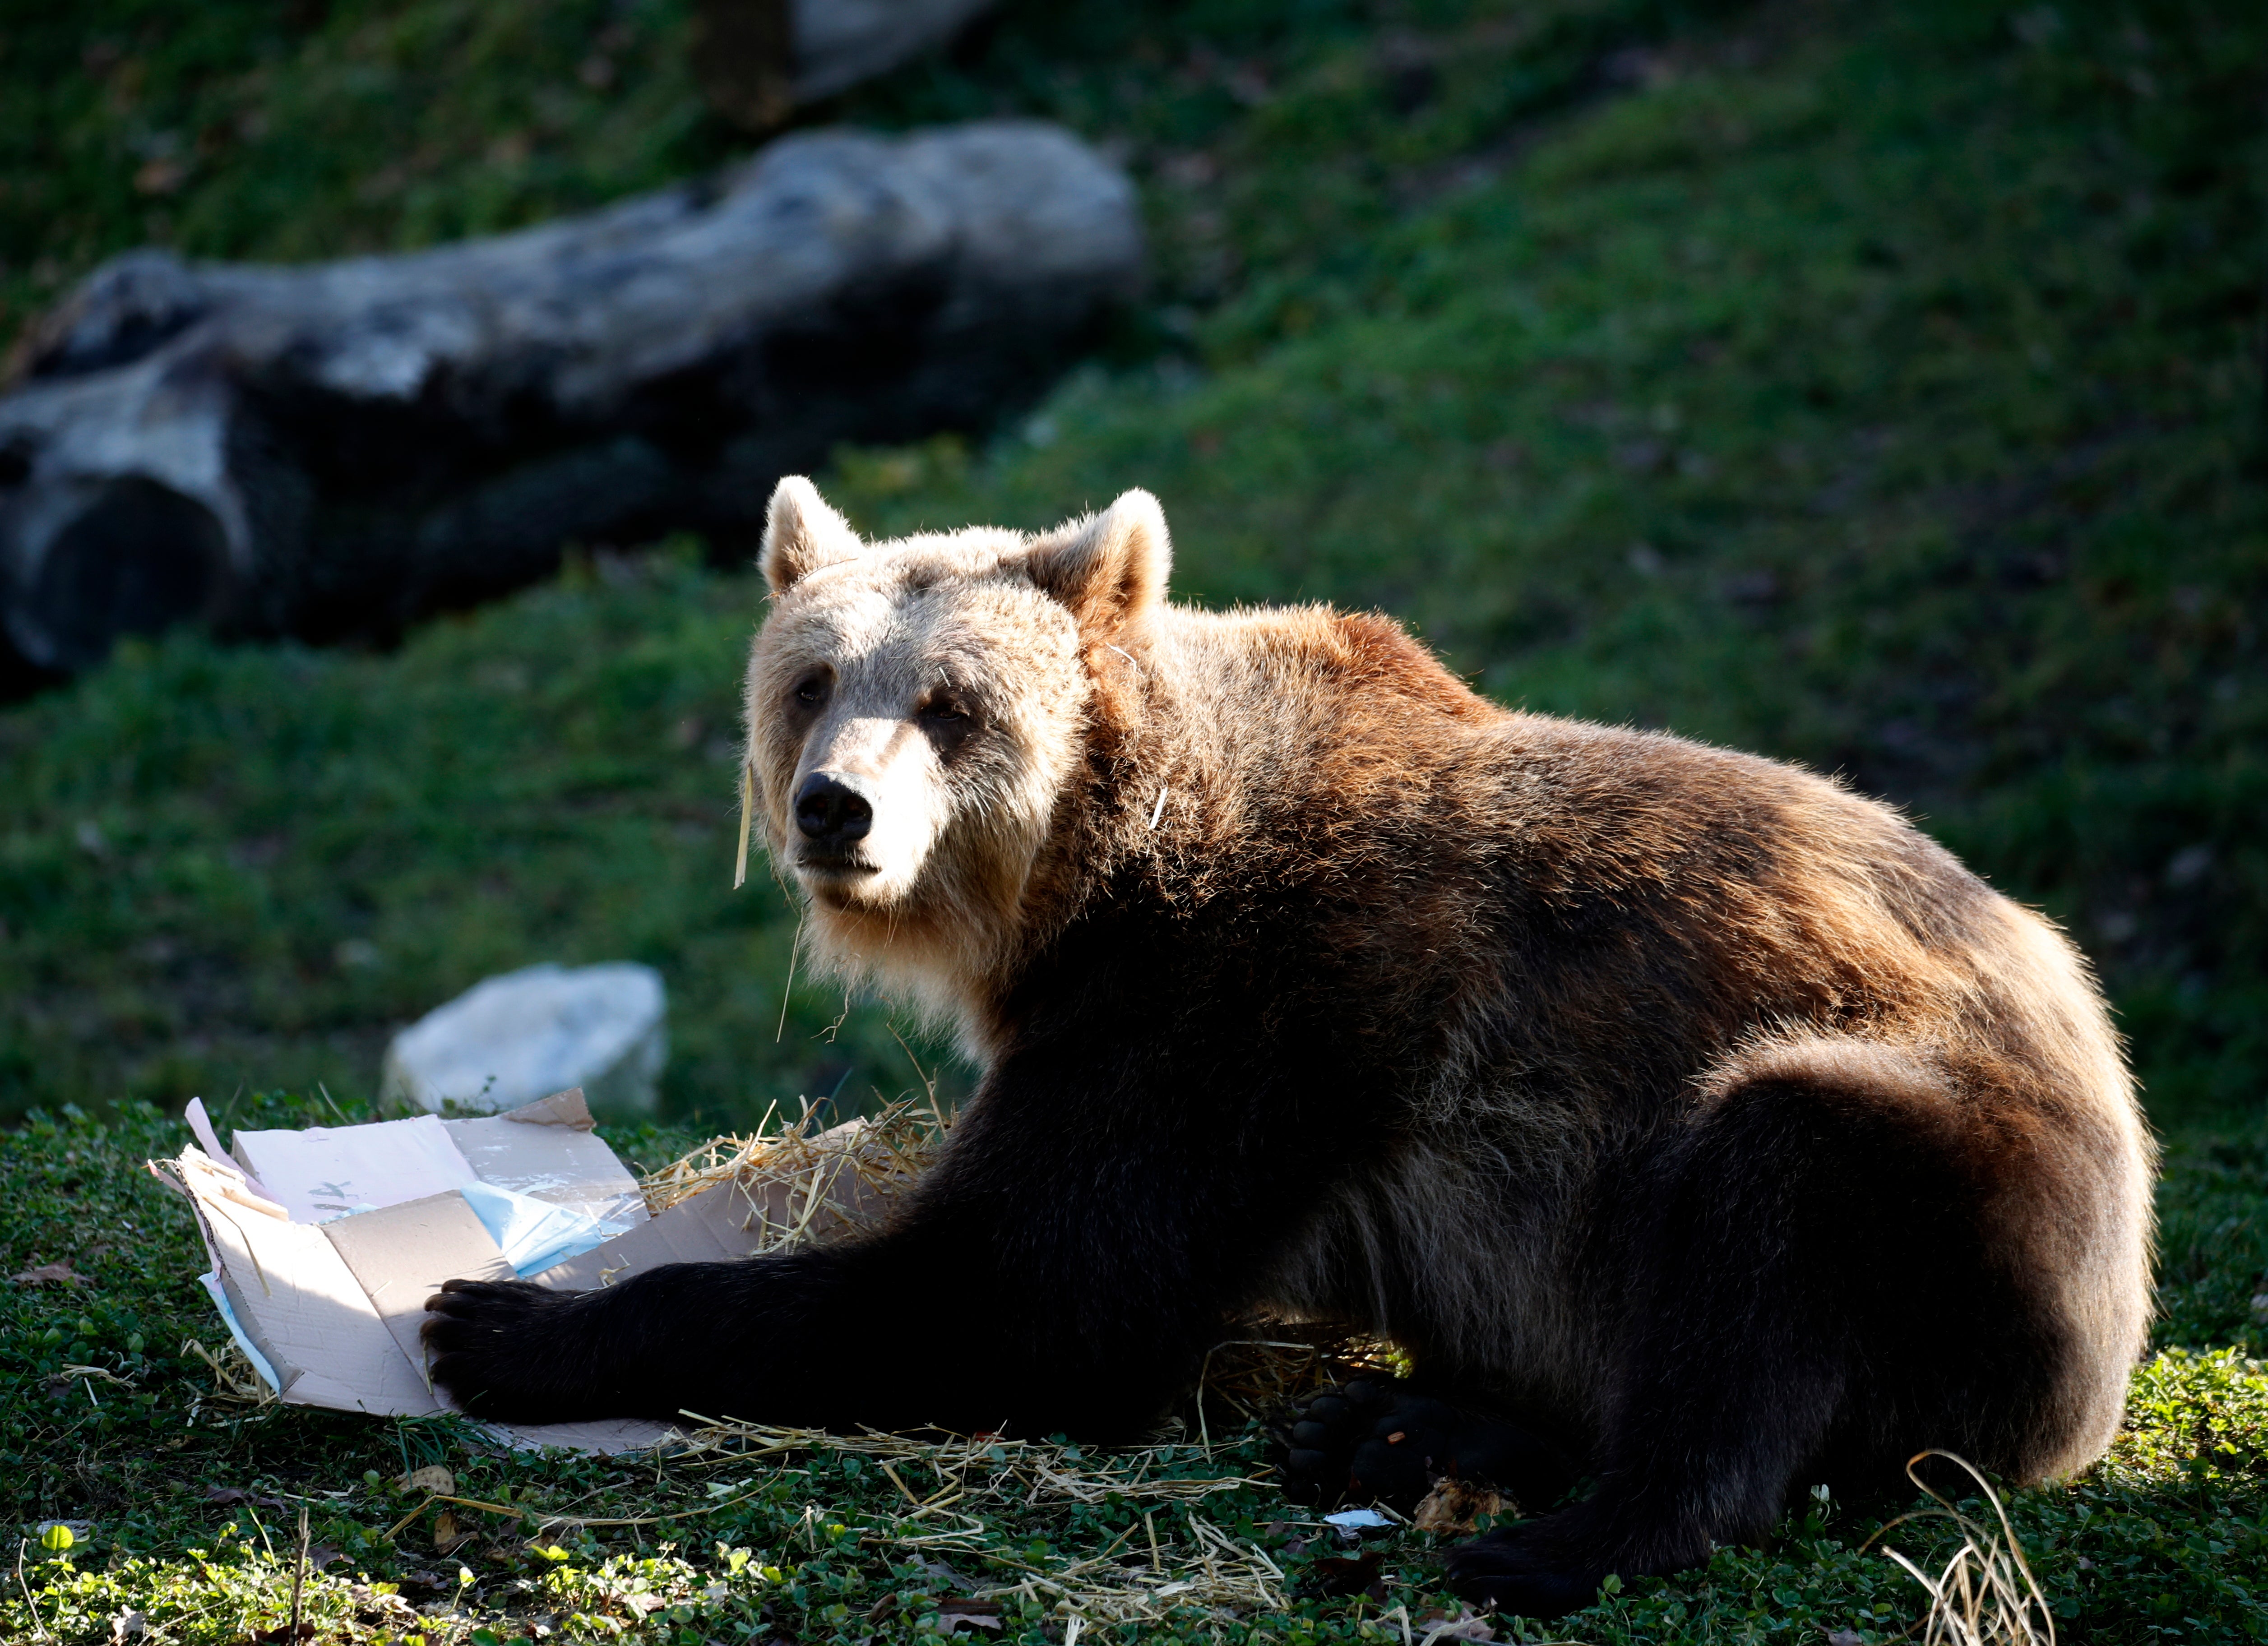 A brown bear eats food in Zagreb Zoo, Croatia